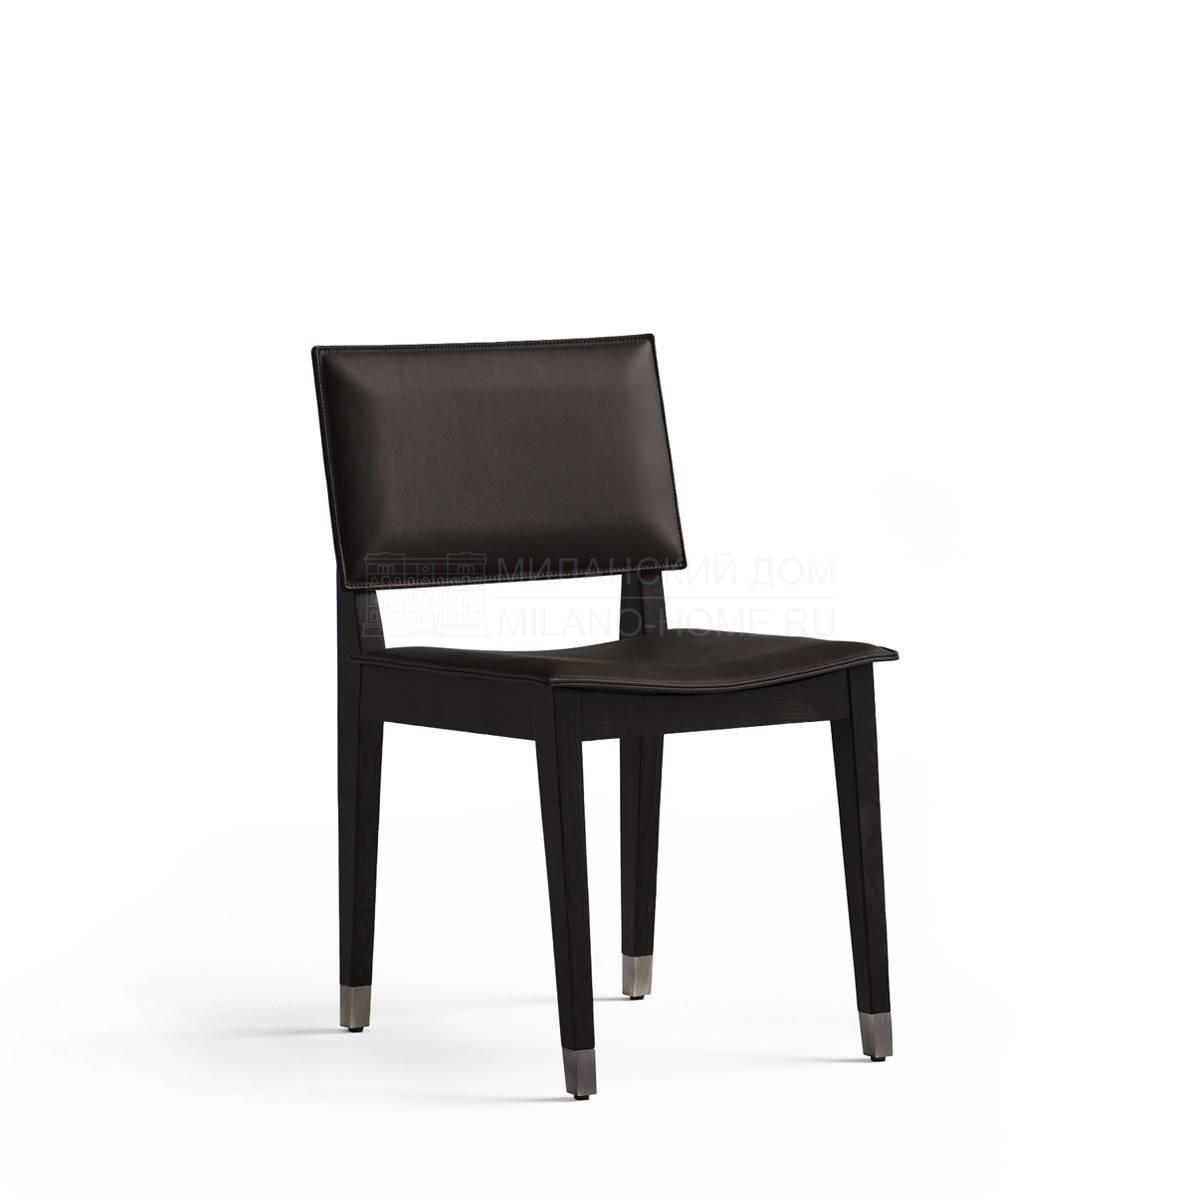 Кожаный стул Tempo chair из Испании фабрики COLECCION ALEXANDRA